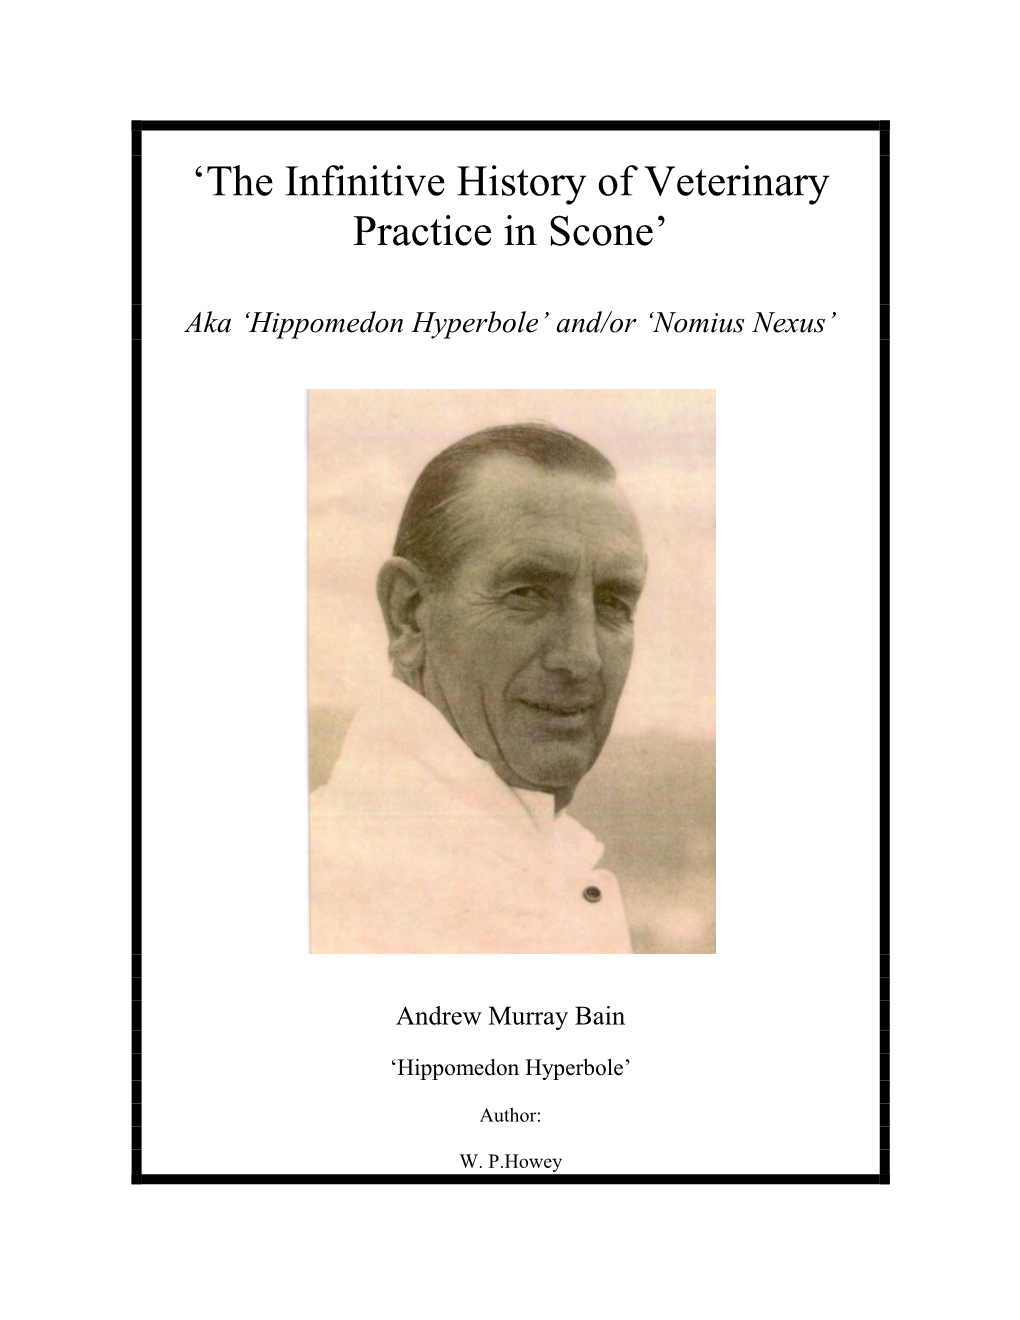 Infinitive History of Veterinary Practice of Scone’